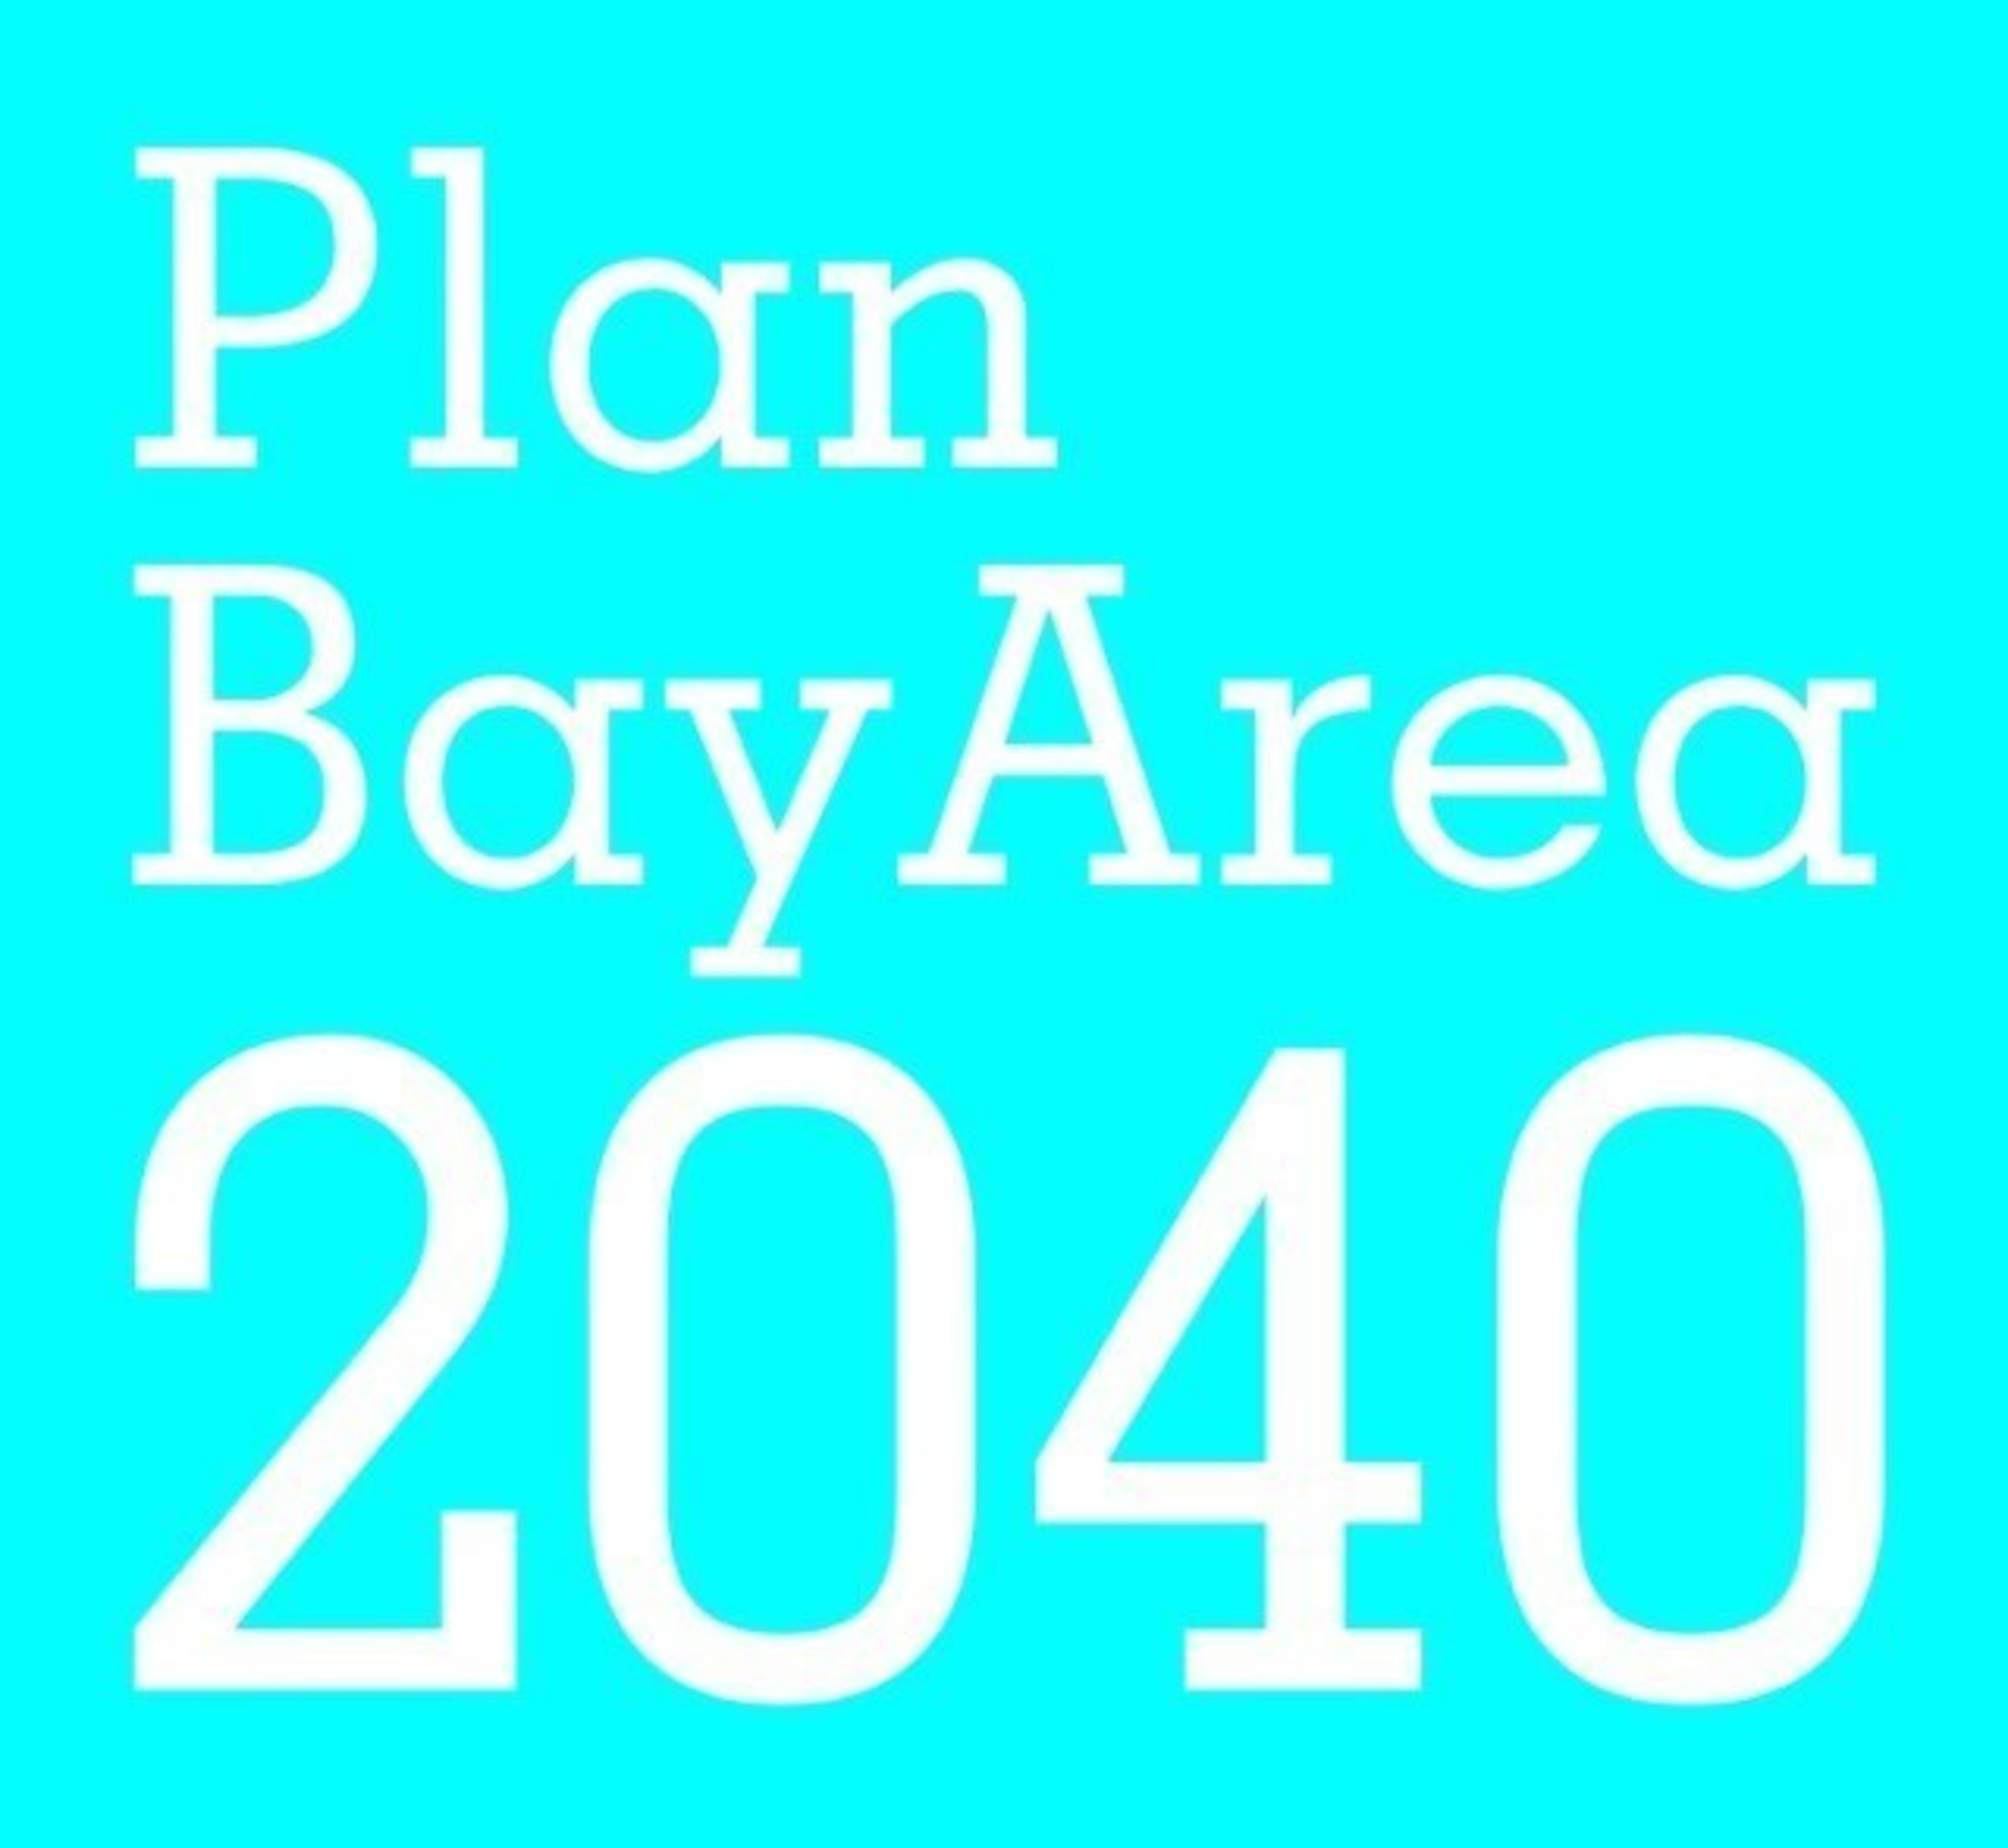 Plan Bay Area 2040 Logo